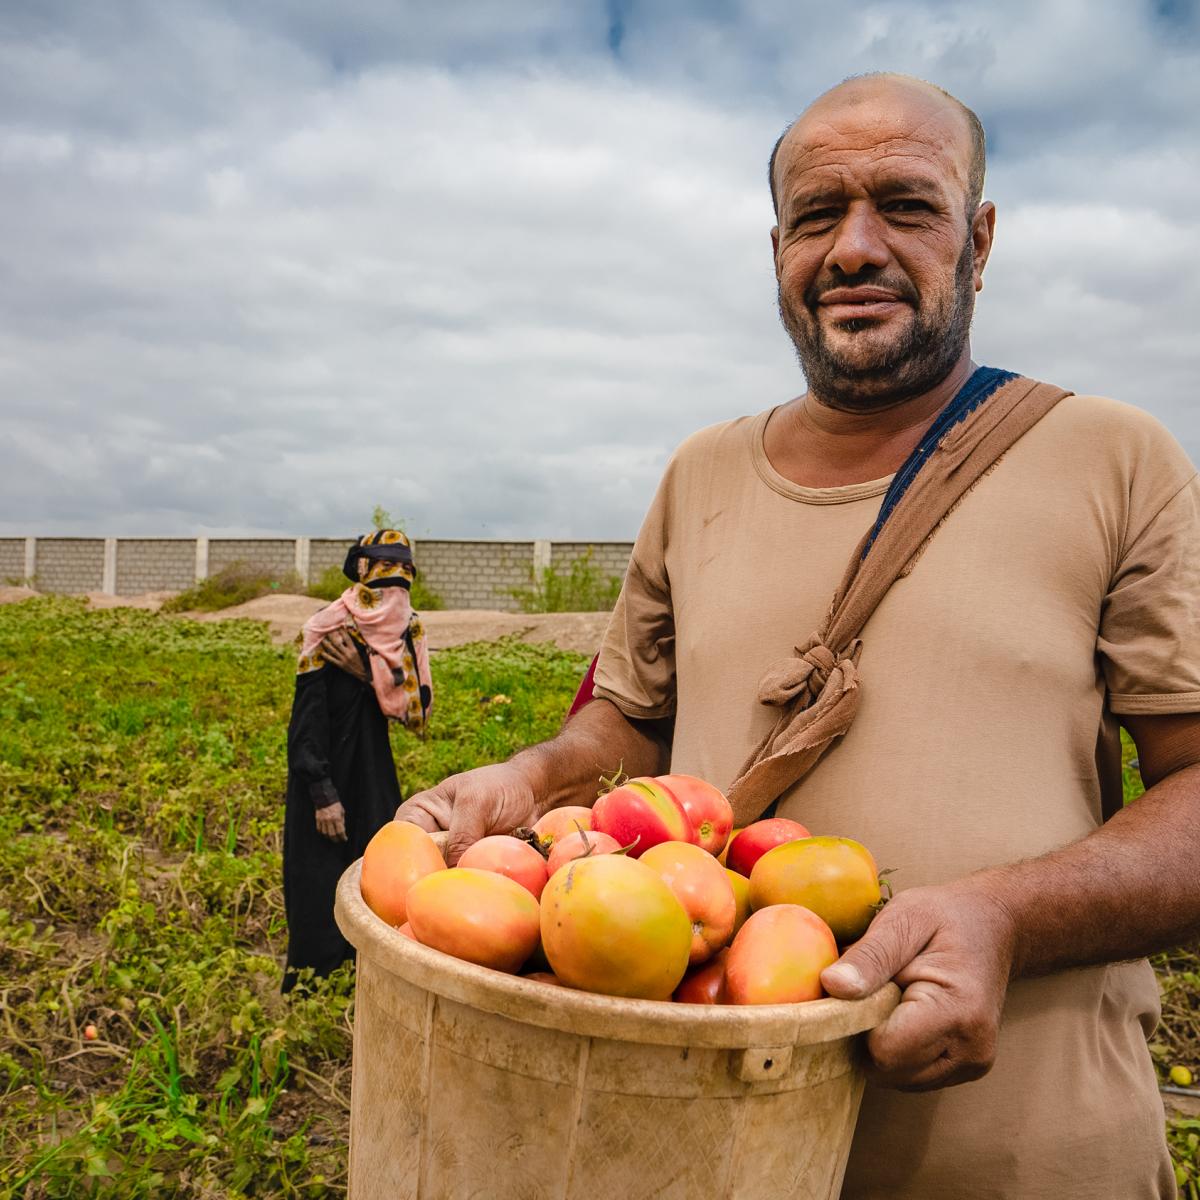 Farm worker harvesting ripe tomatoes